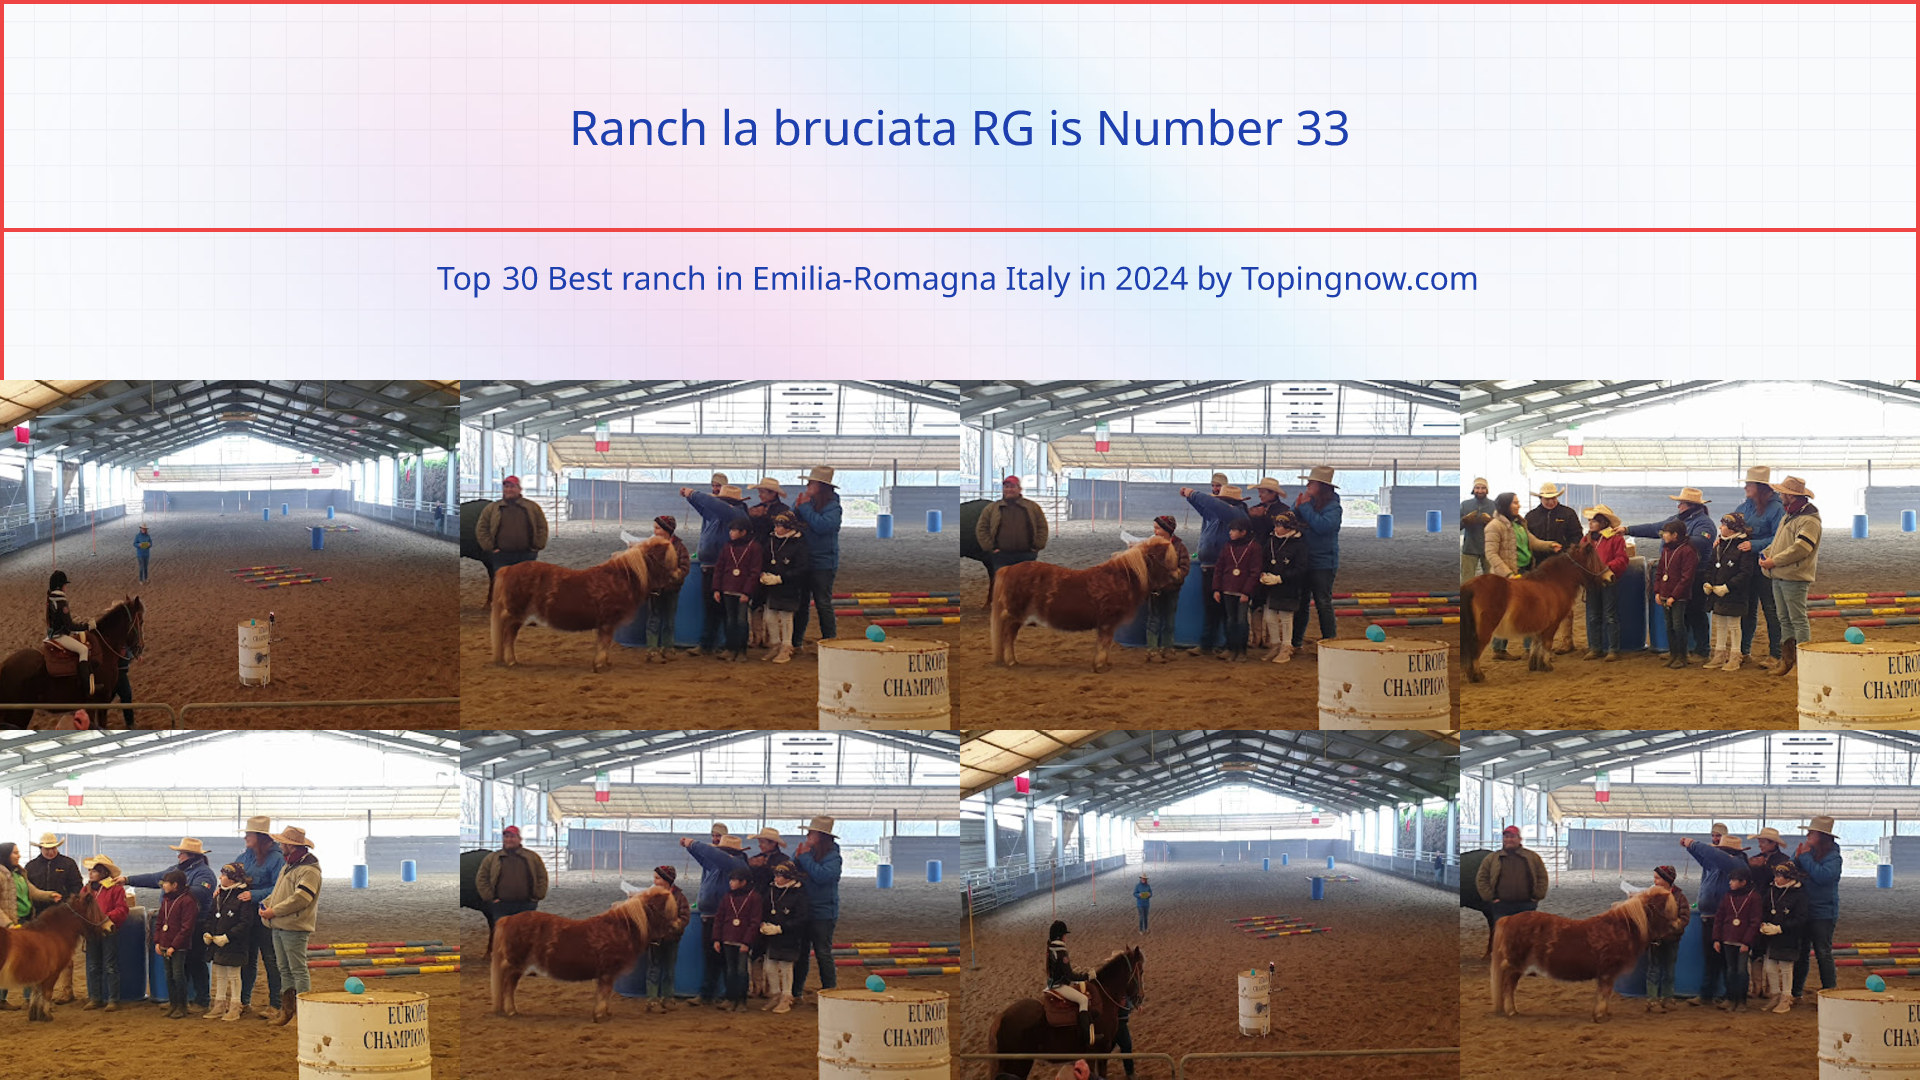 Ranch la bruciata RG: Top 30 Best ranch in Emilia-Romagna Italy in 2024